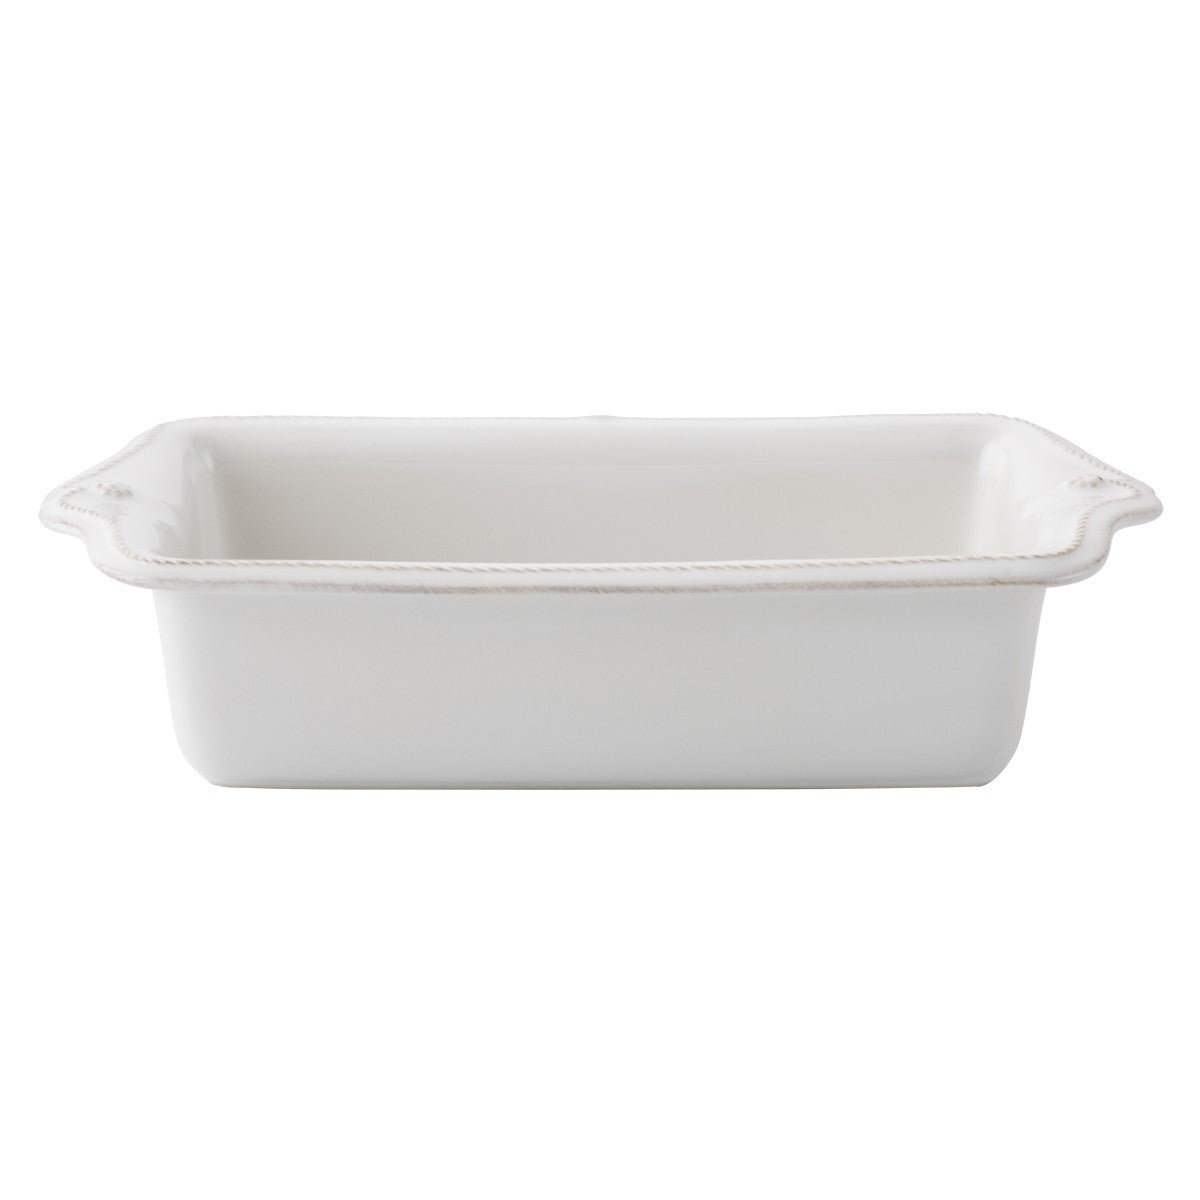 Staub Ceramic 10.5 x 7.5 Rectangular Baking Dish - White